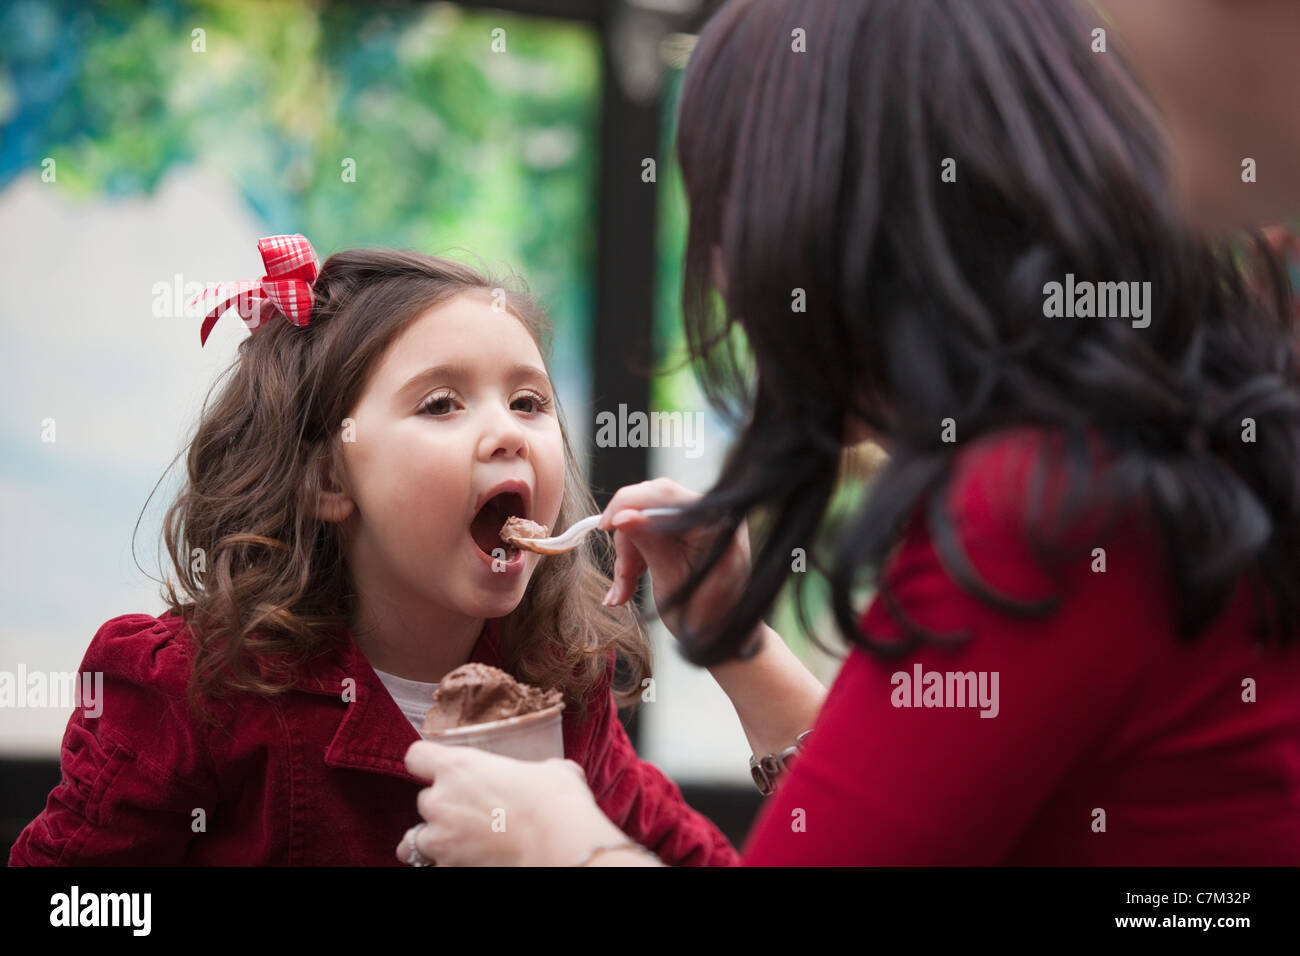 Woman feeding ice cream to her daughter Stock Photo